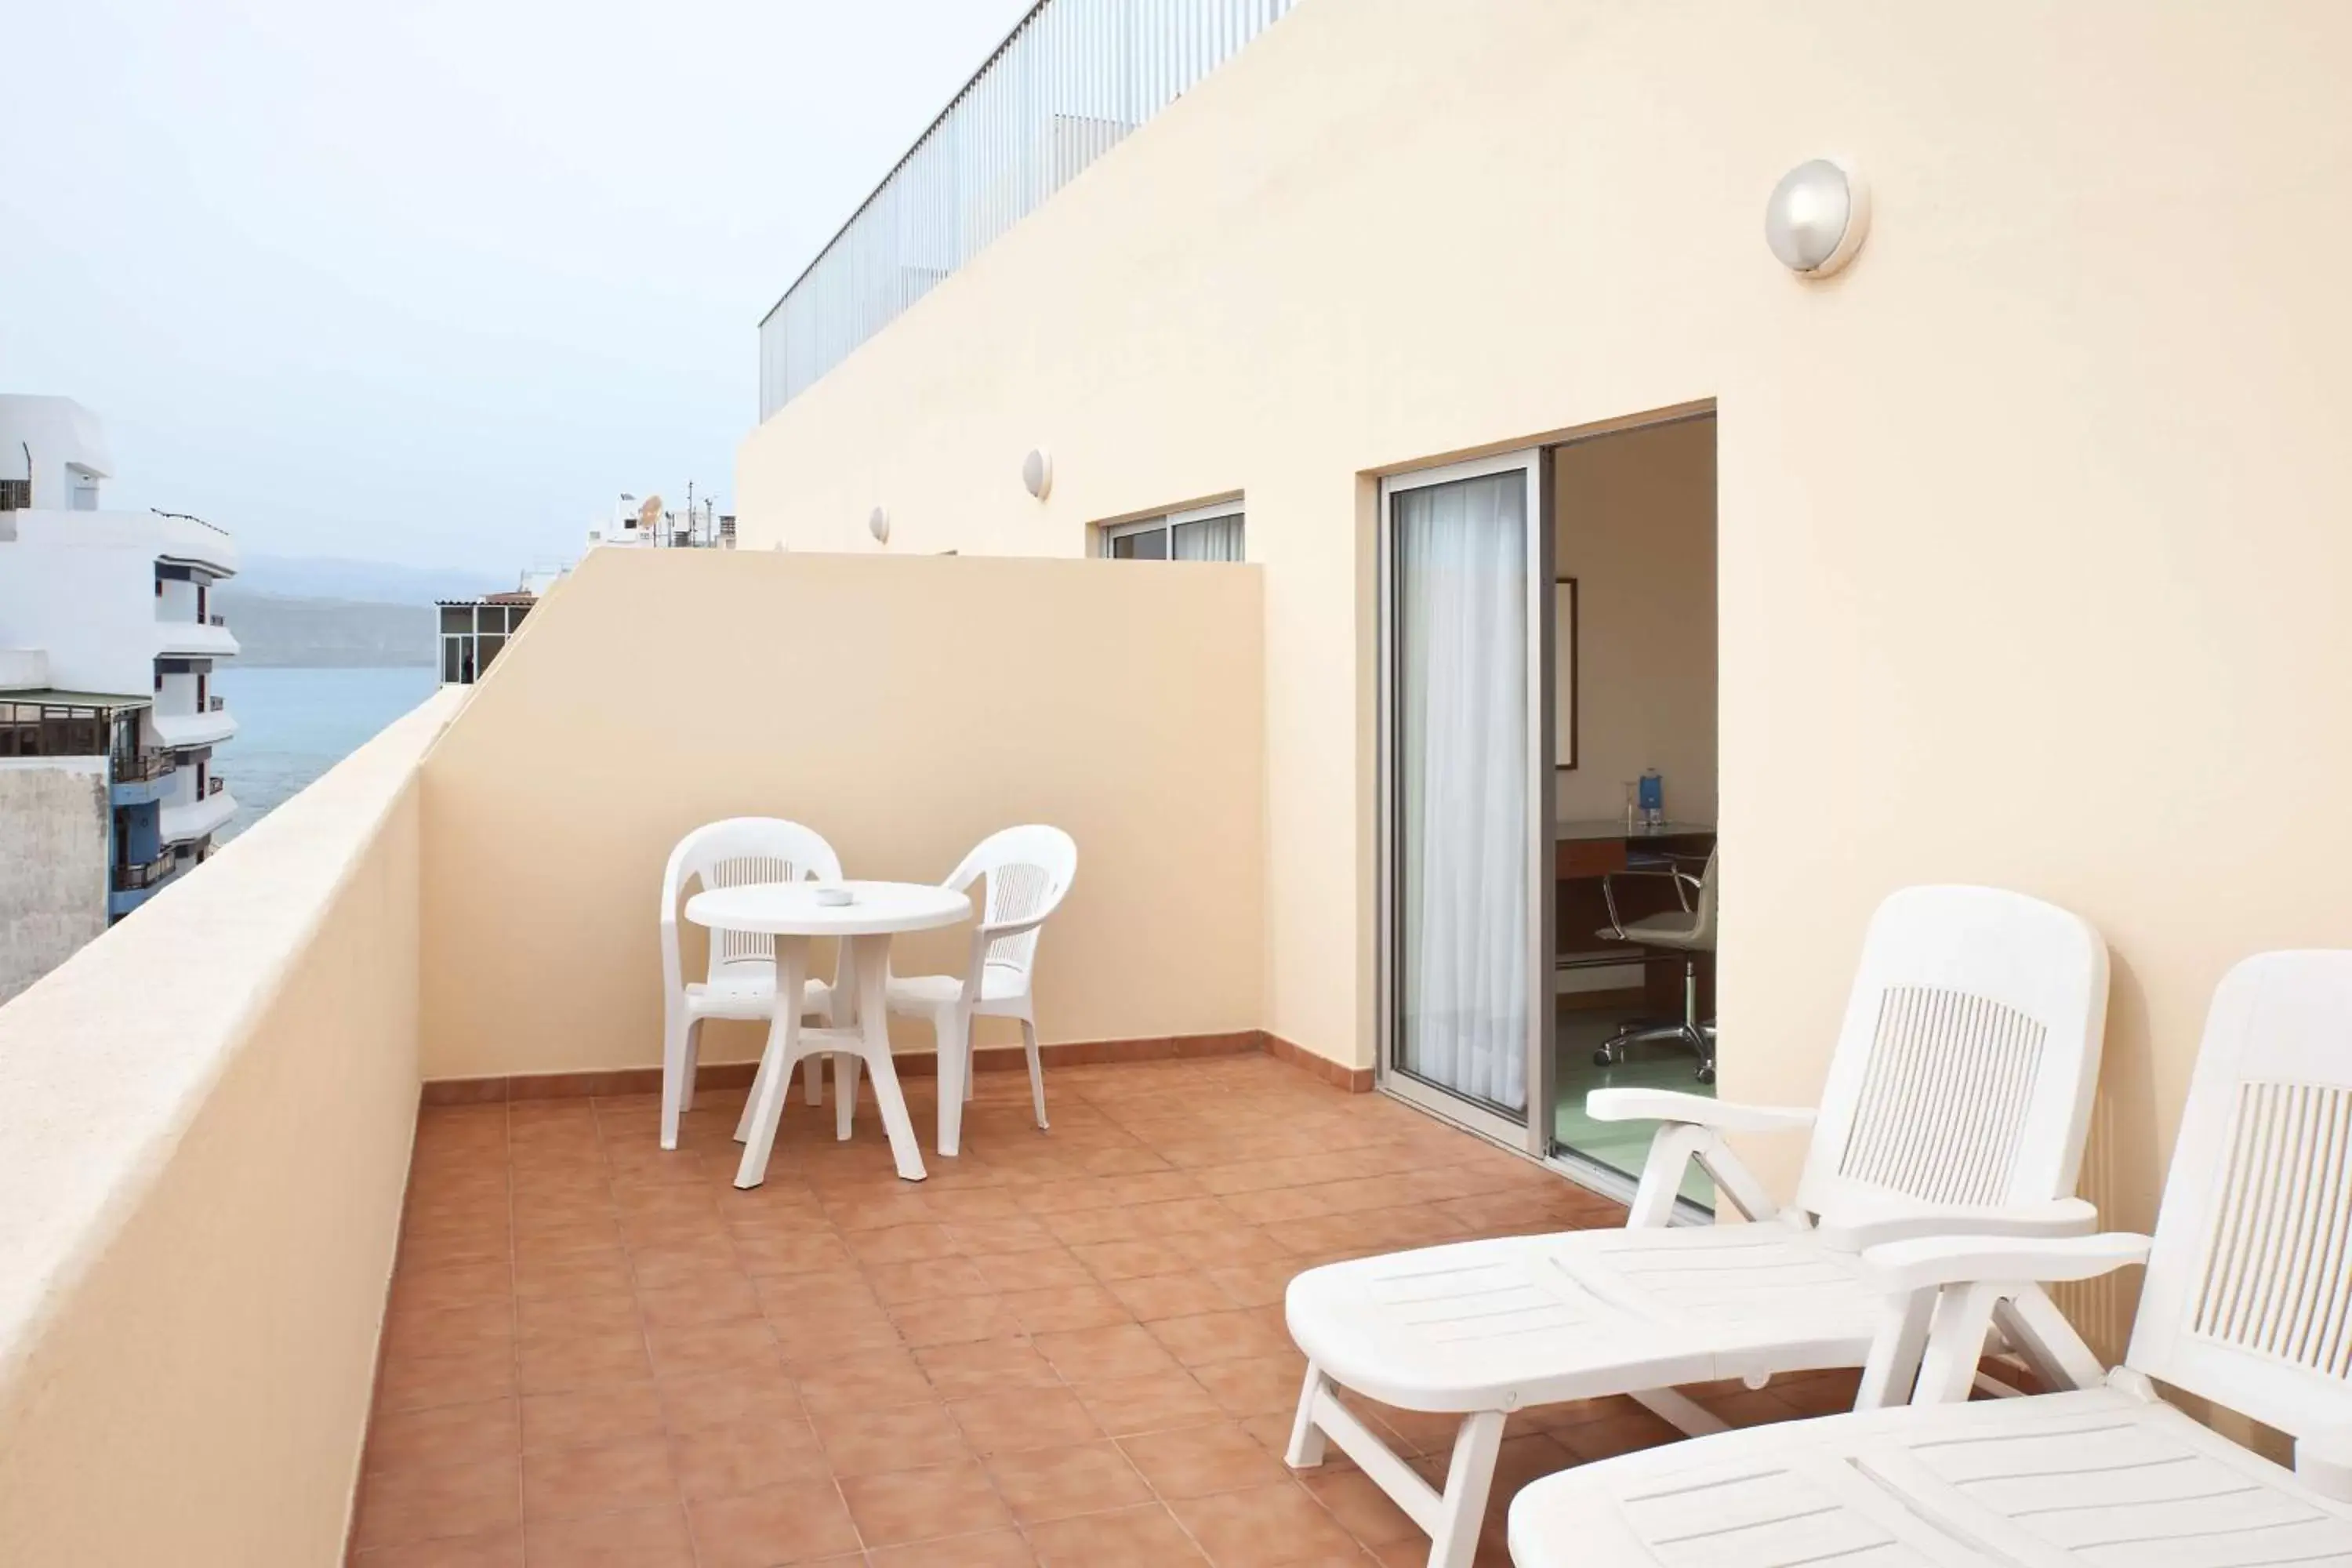 Photo of the whole room, Balcony/Terrace in NH Las Palmas Playa las Canteras